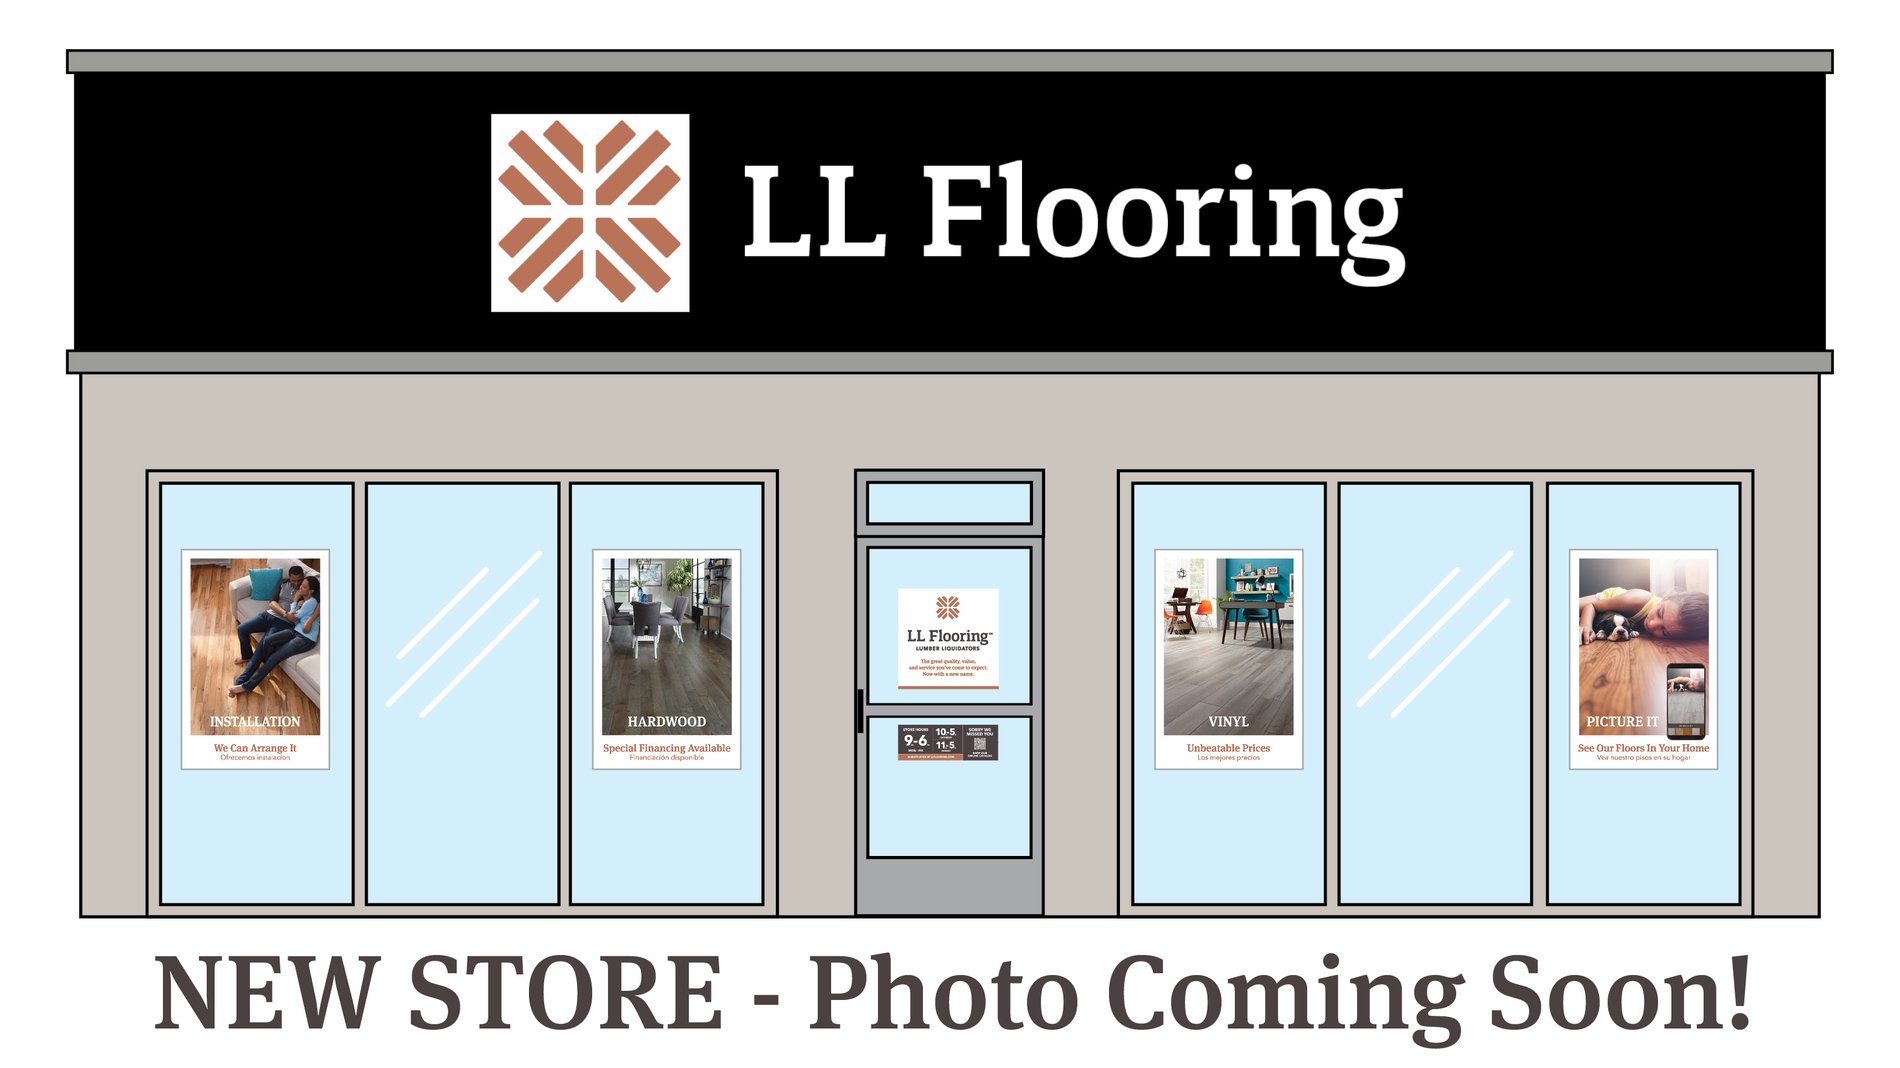 LL Flooring #1459 Joplin | 732 S. Range Line Rd. | Storefront Photo Coming Soon